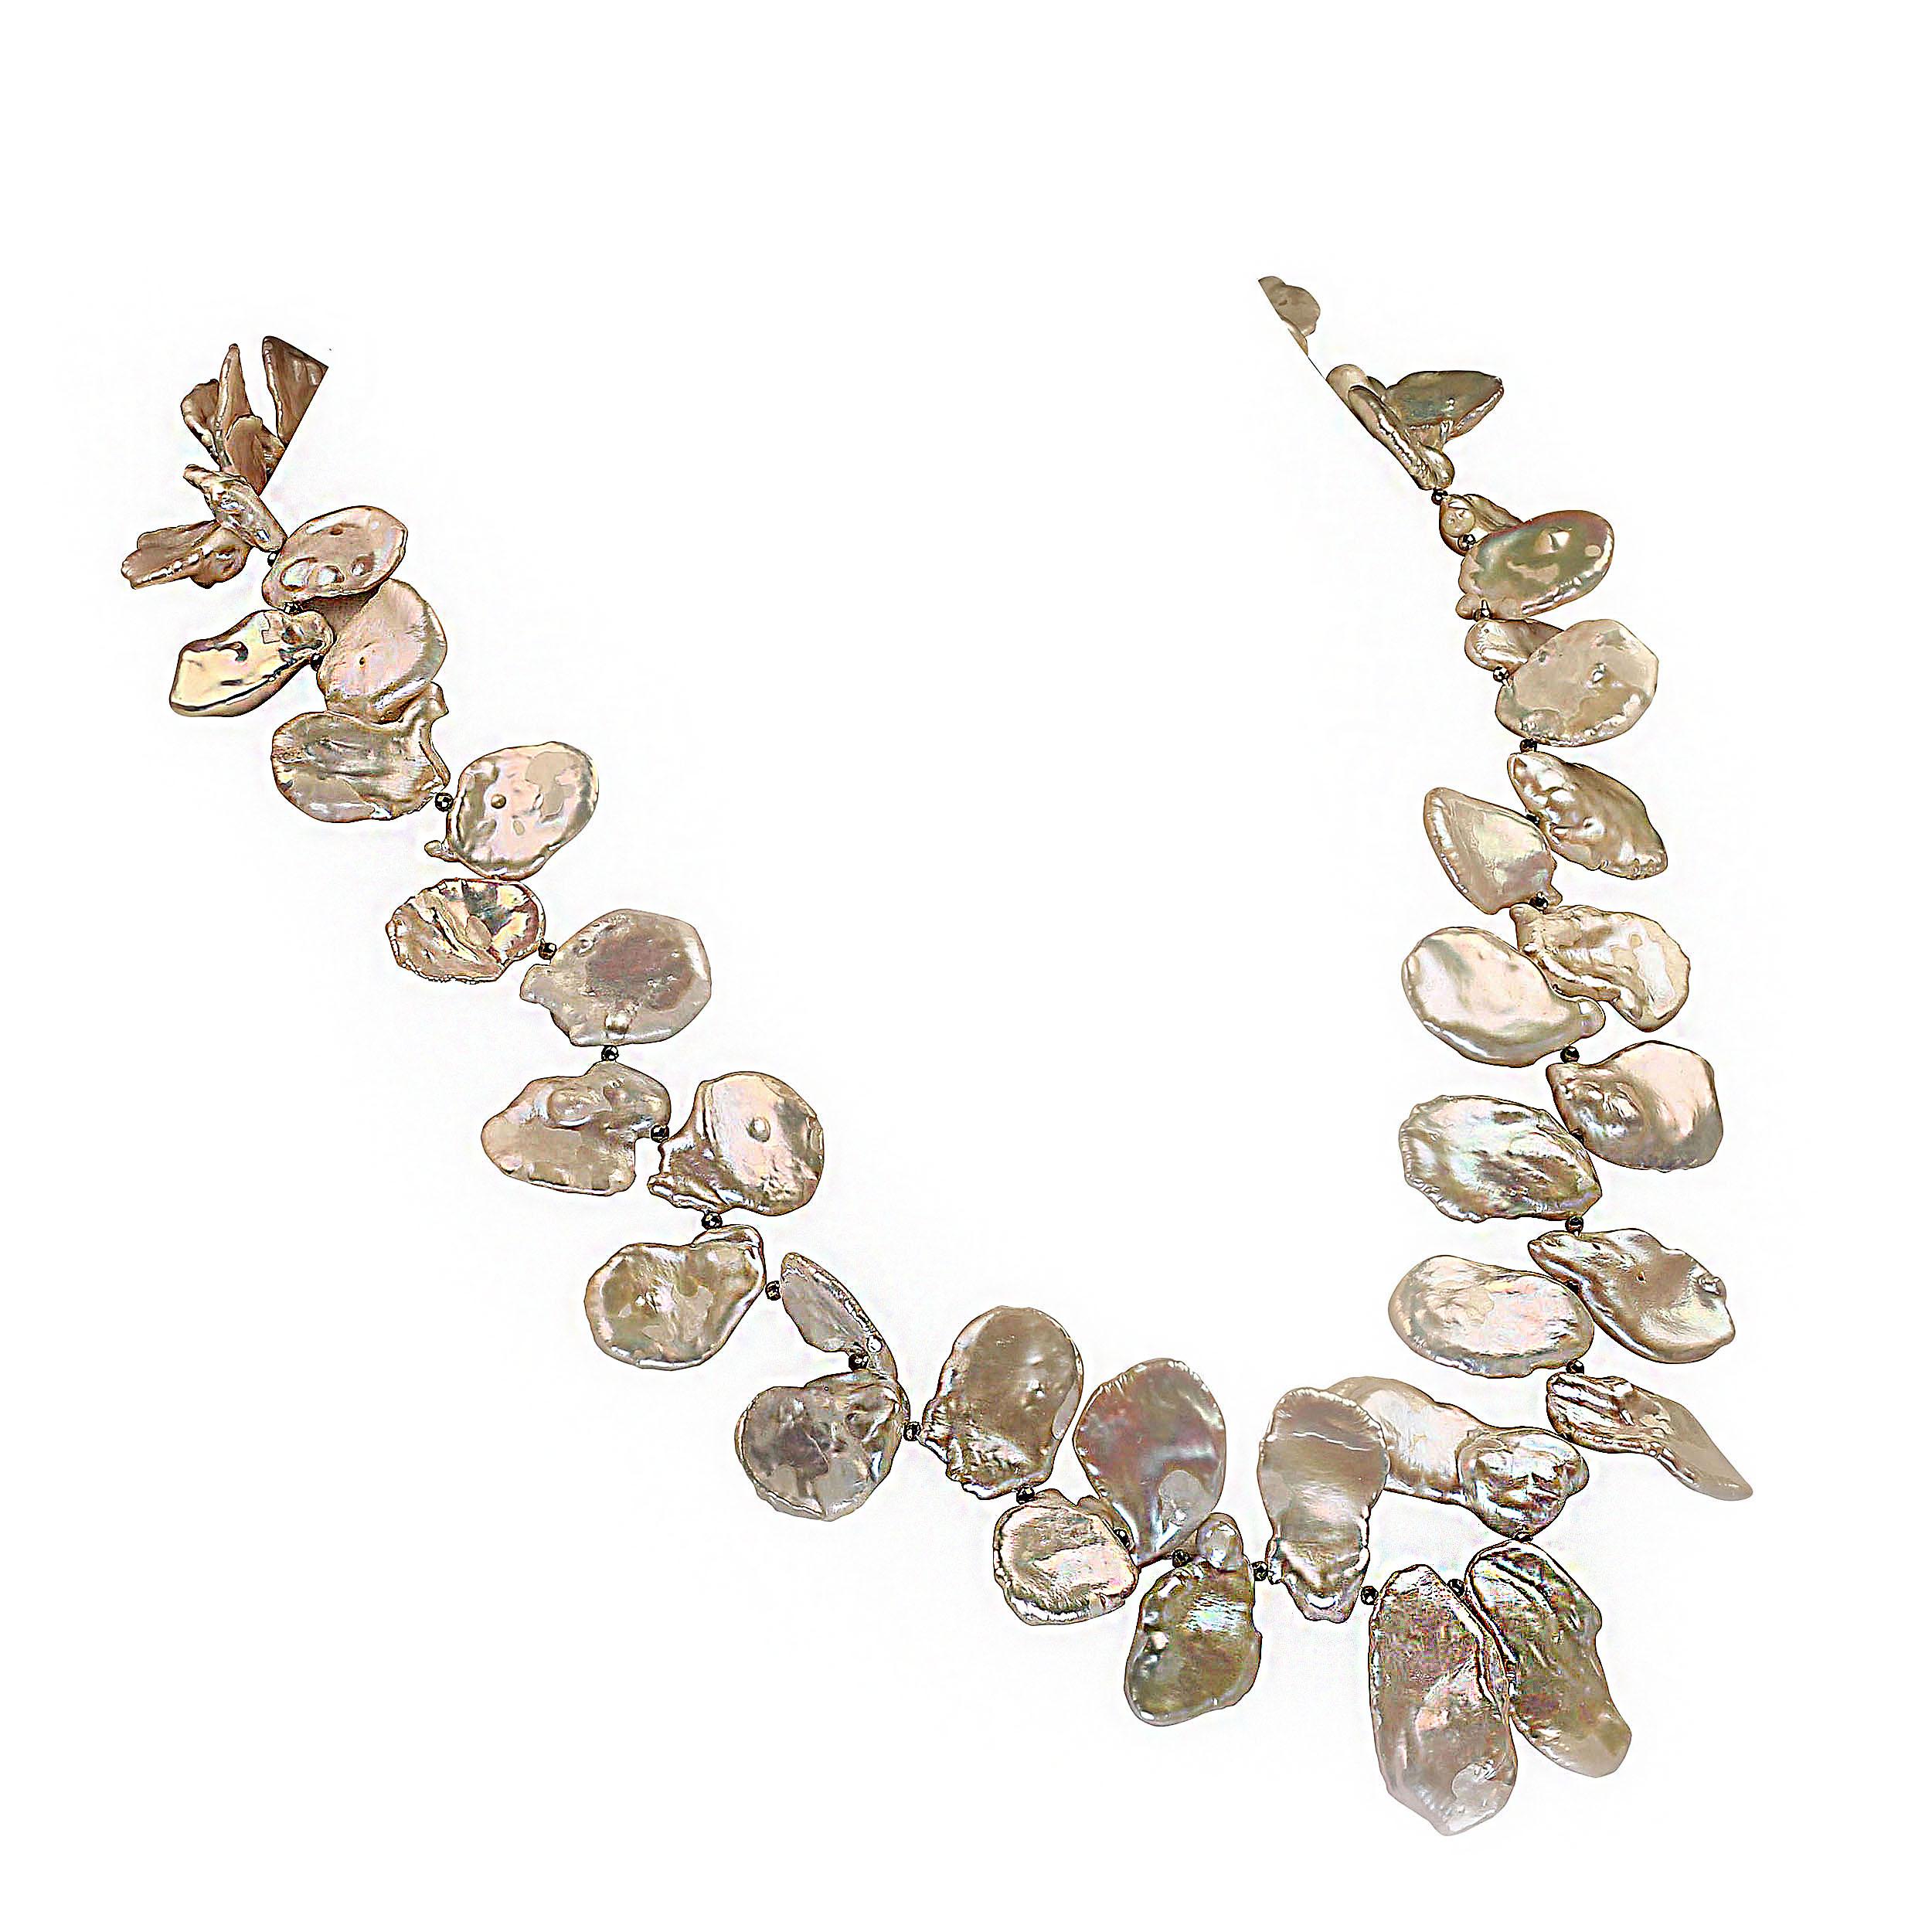 AJD Matinee Long collier de perles Keshi blanches et iridescentes, pierre de naissance de juin